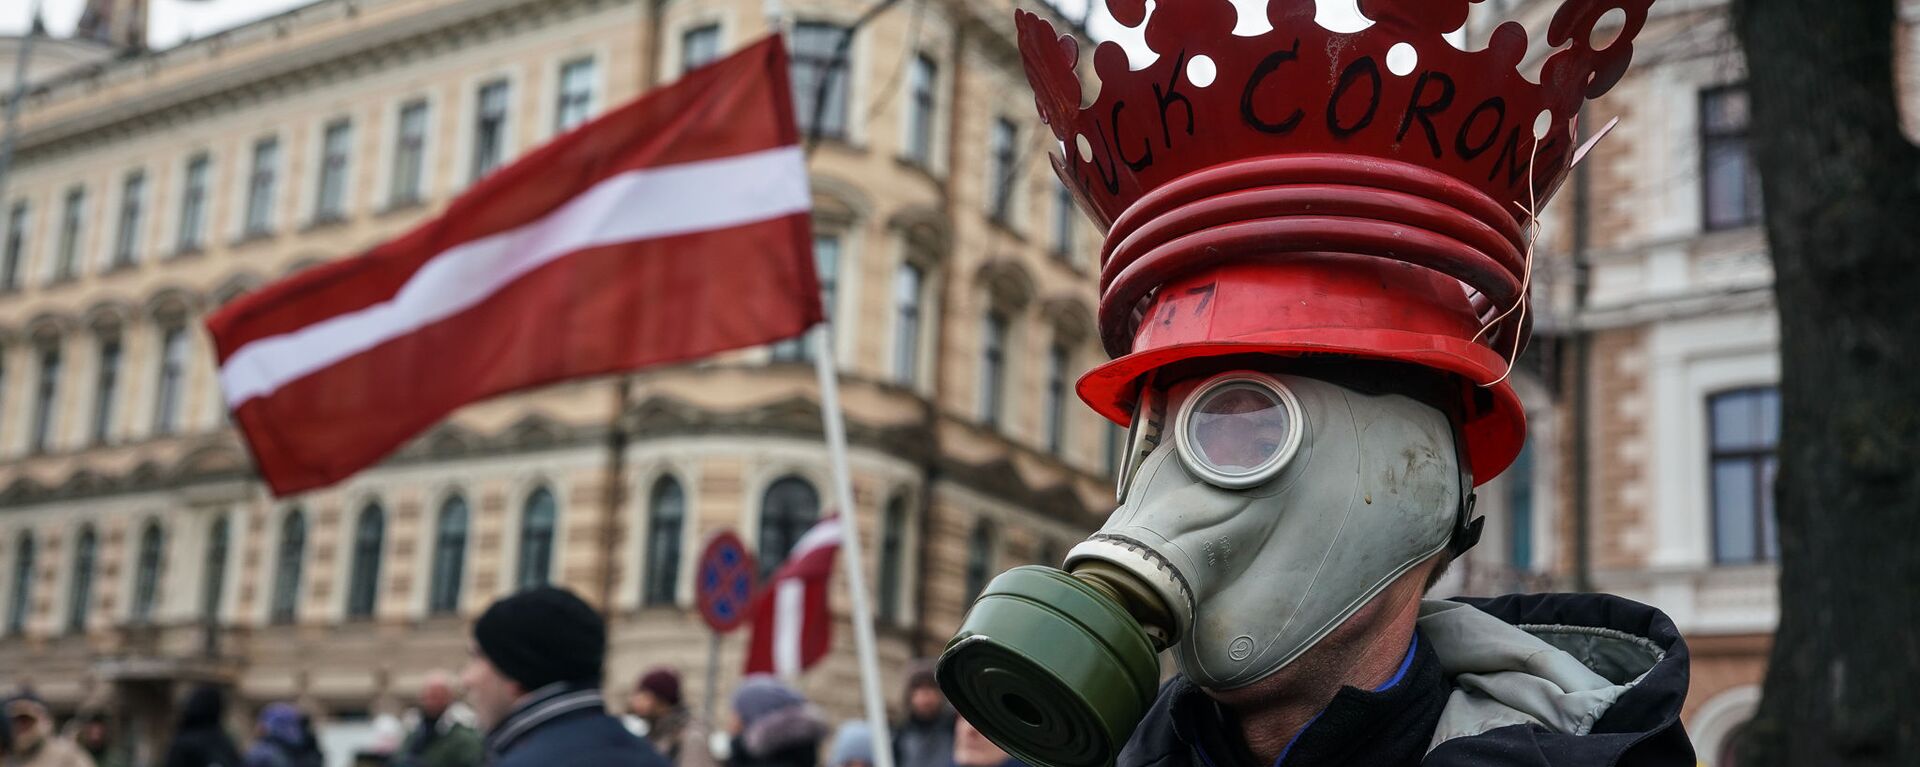 Акция протеста на набережной 11 Ноября в Риге.  - Sputnik Латвия, 1920, 25.01.2021